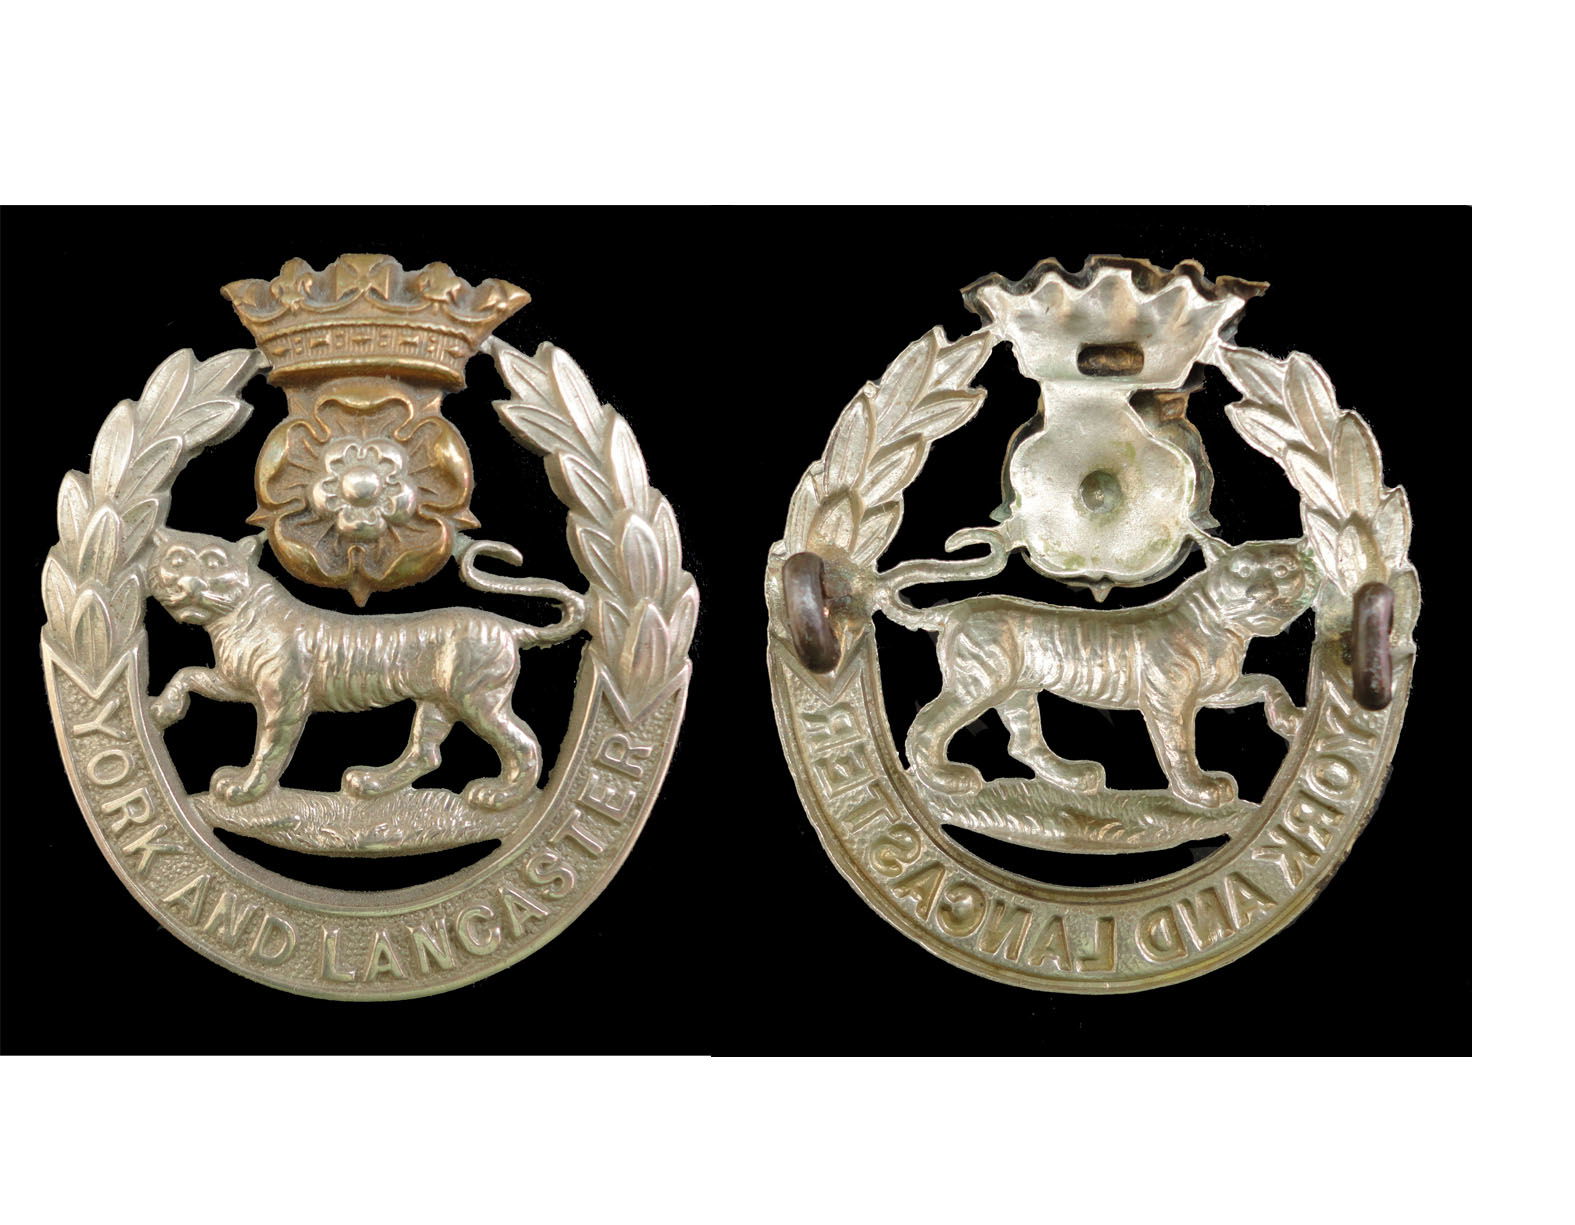 1st Volunteer (Hallamshire) Battalion Badge 1897 to 1908-1st pattern